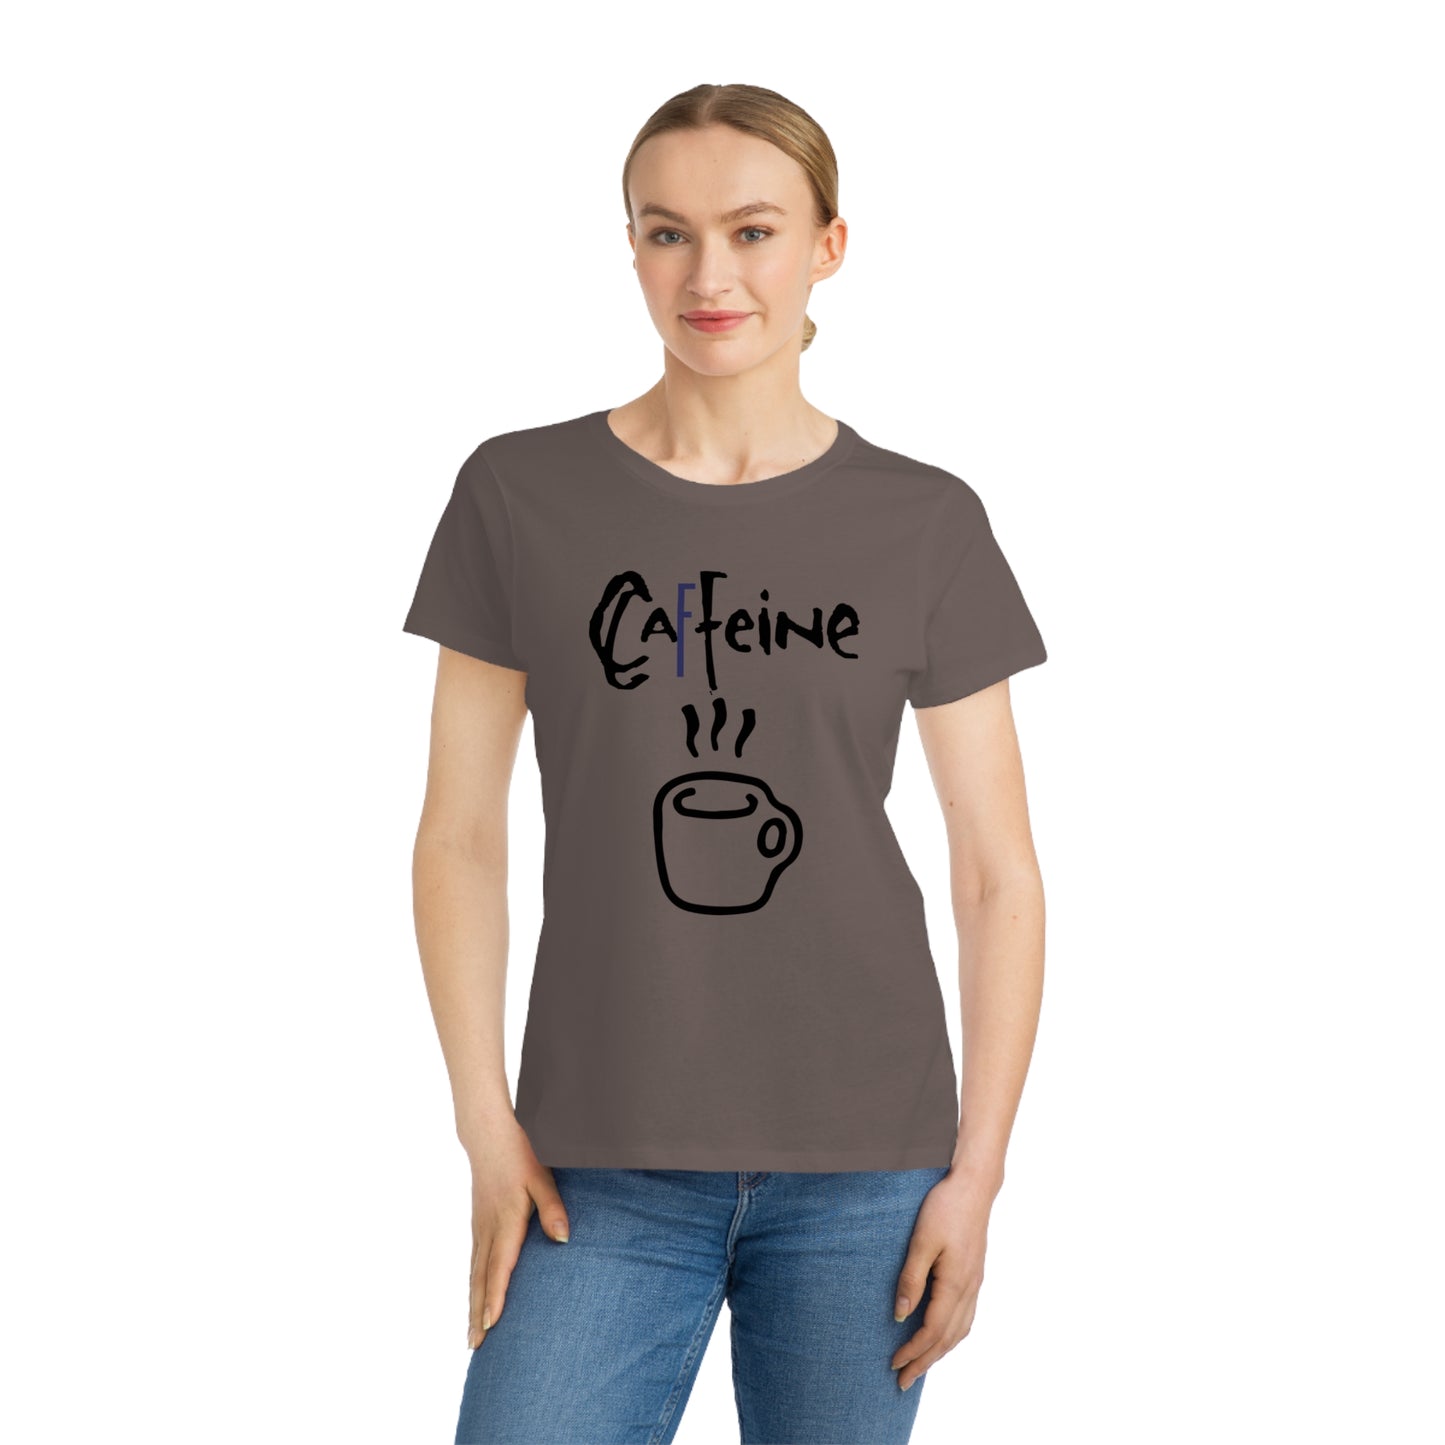 Caffeine Magazine "OG" Organic Women's Classic T-Shirt